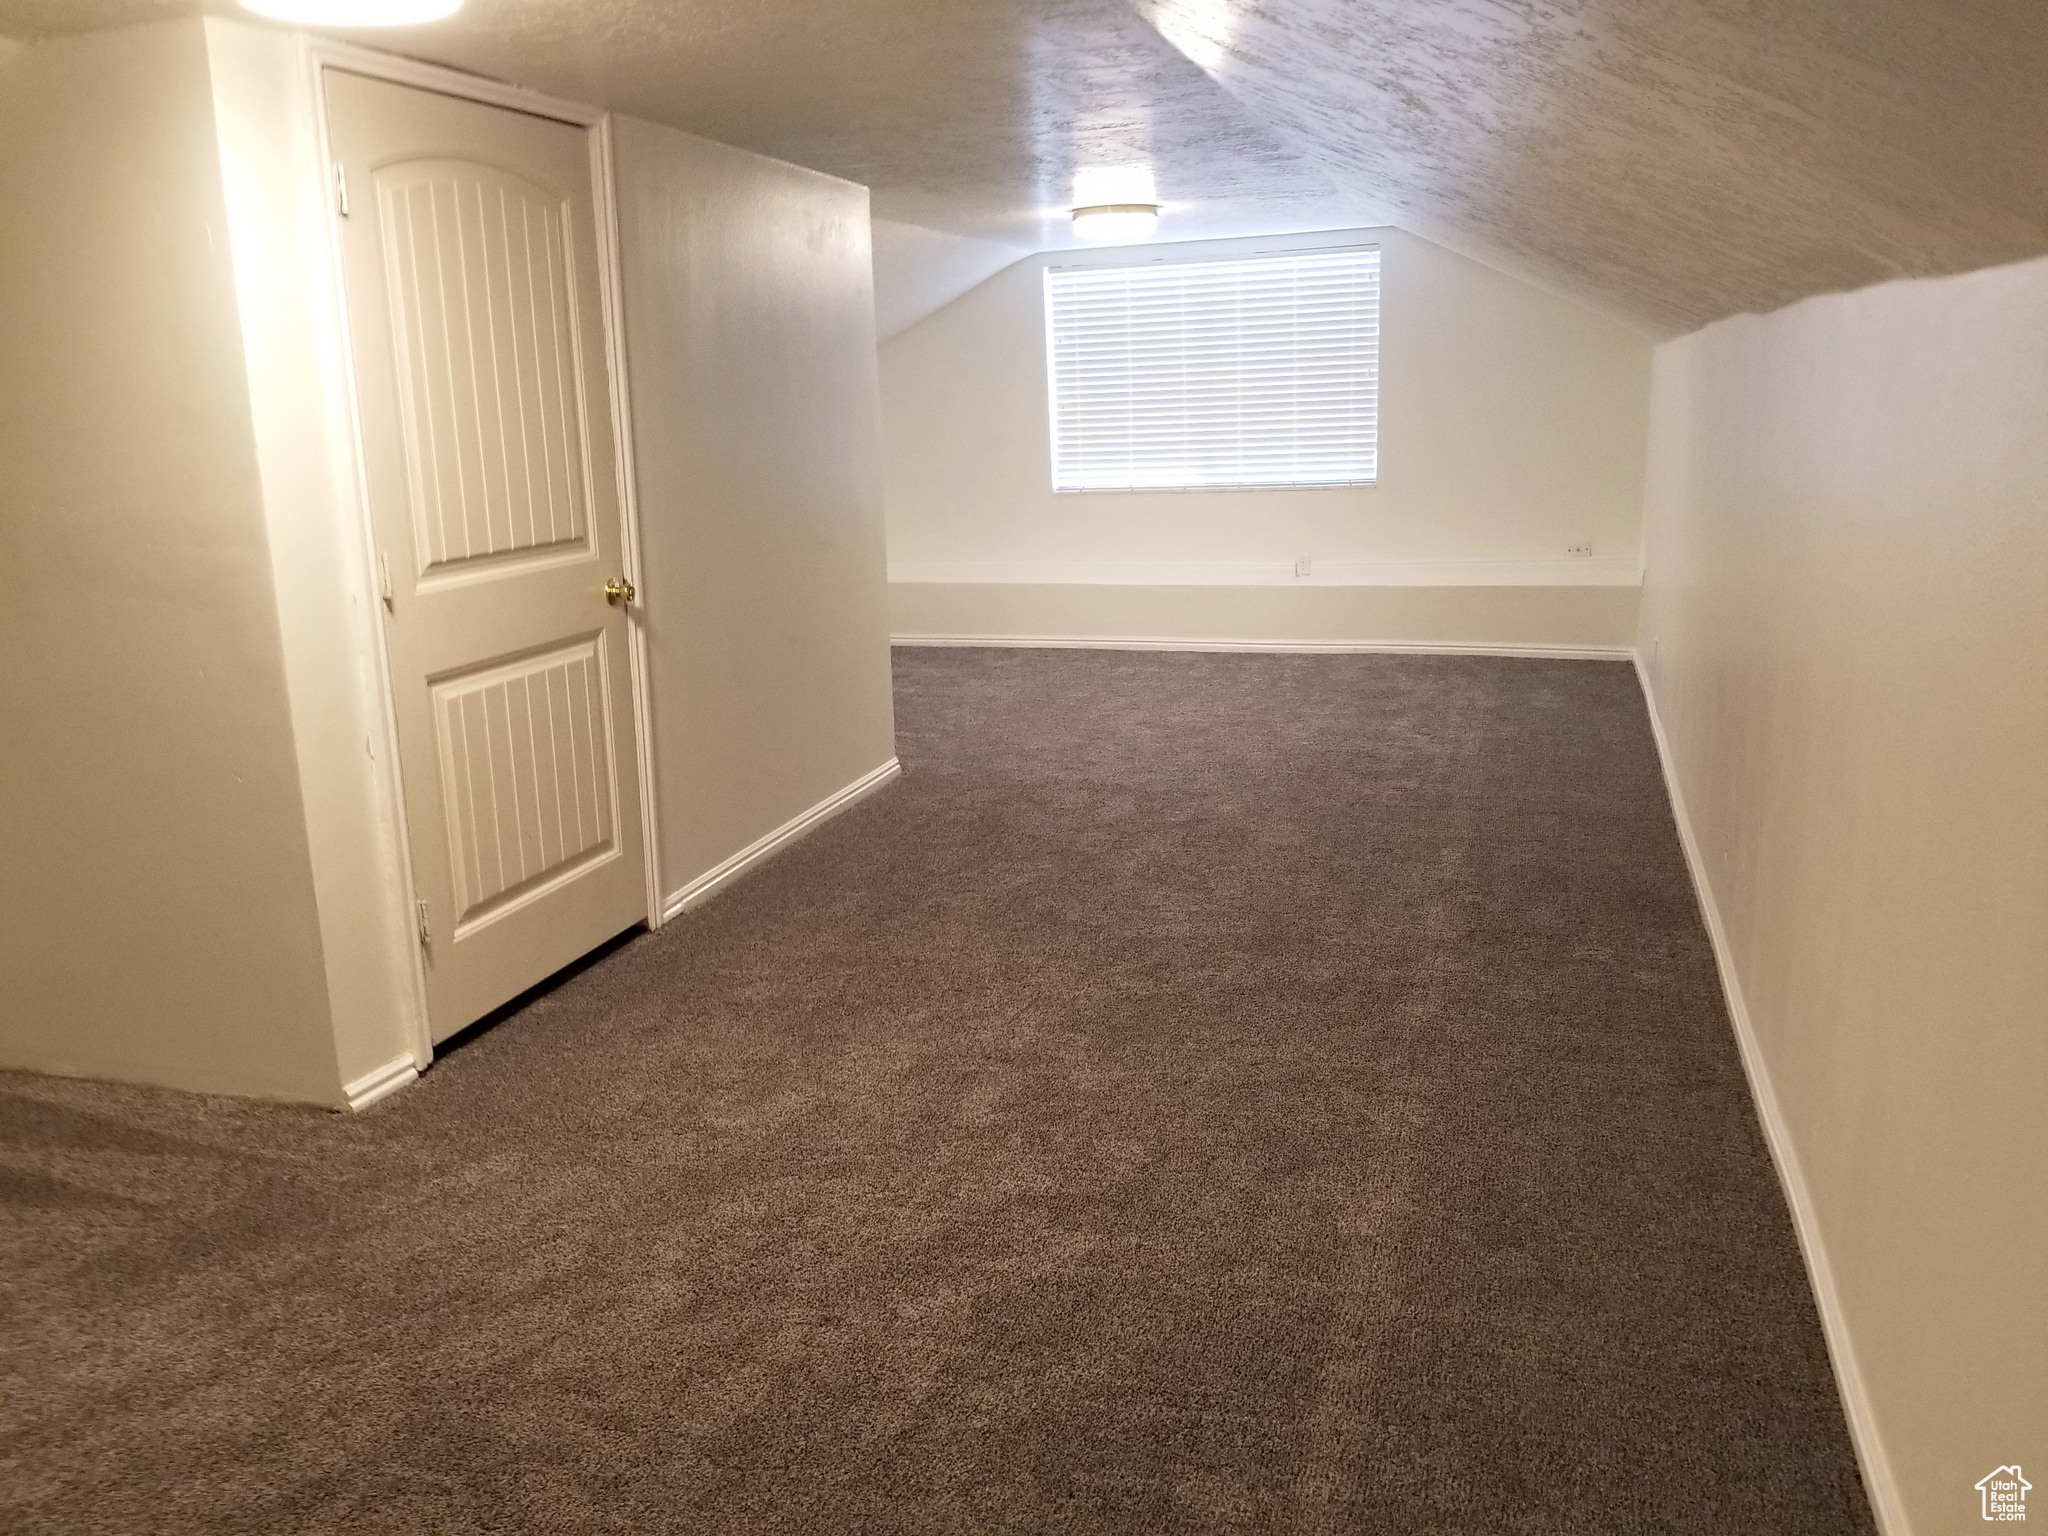 Bonus room featuring vaulted ceiling, dark carpet, and a textured ceiling